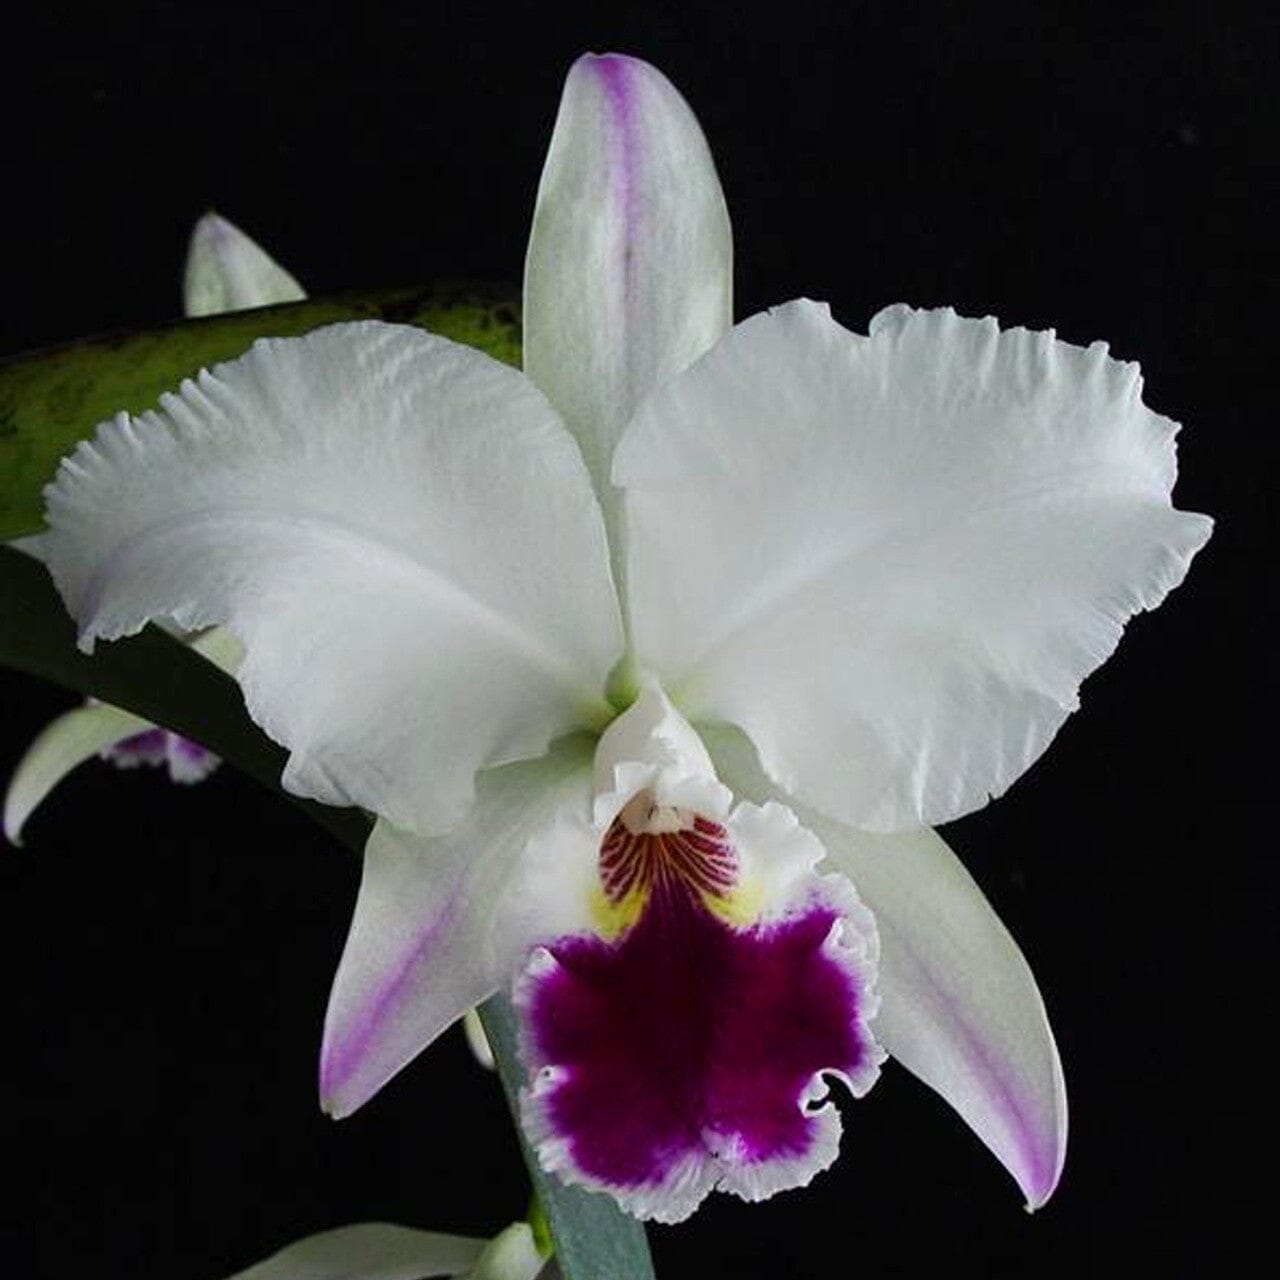 Cattleya labiata var. semi alba flamea x var. coerulea 'September Mist' Cattleya La Foresta Orchids 